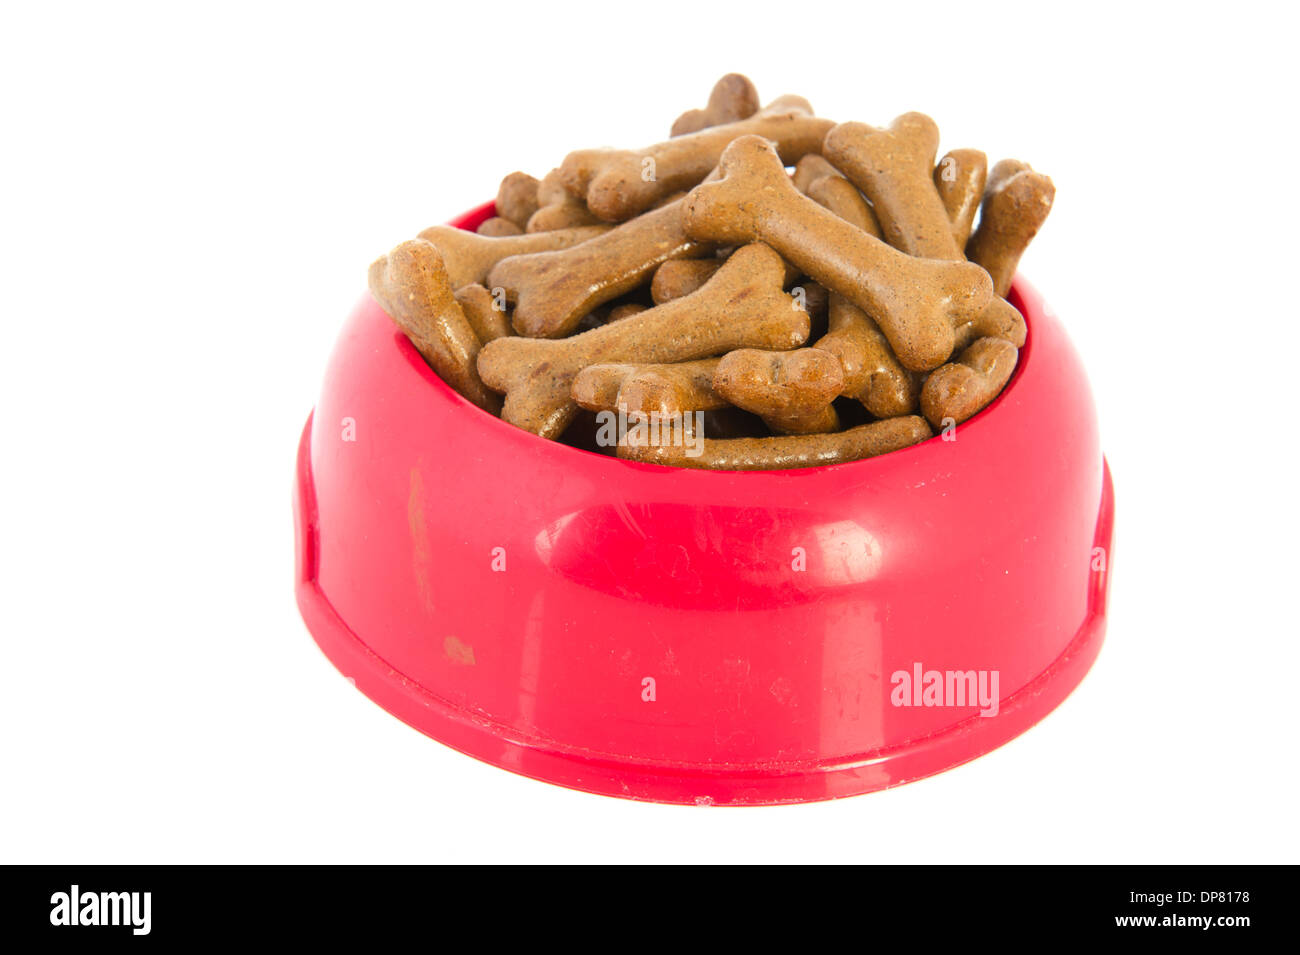 Roten Kunststoff-Tablett mit Essen Hundeknochen Stockfoto